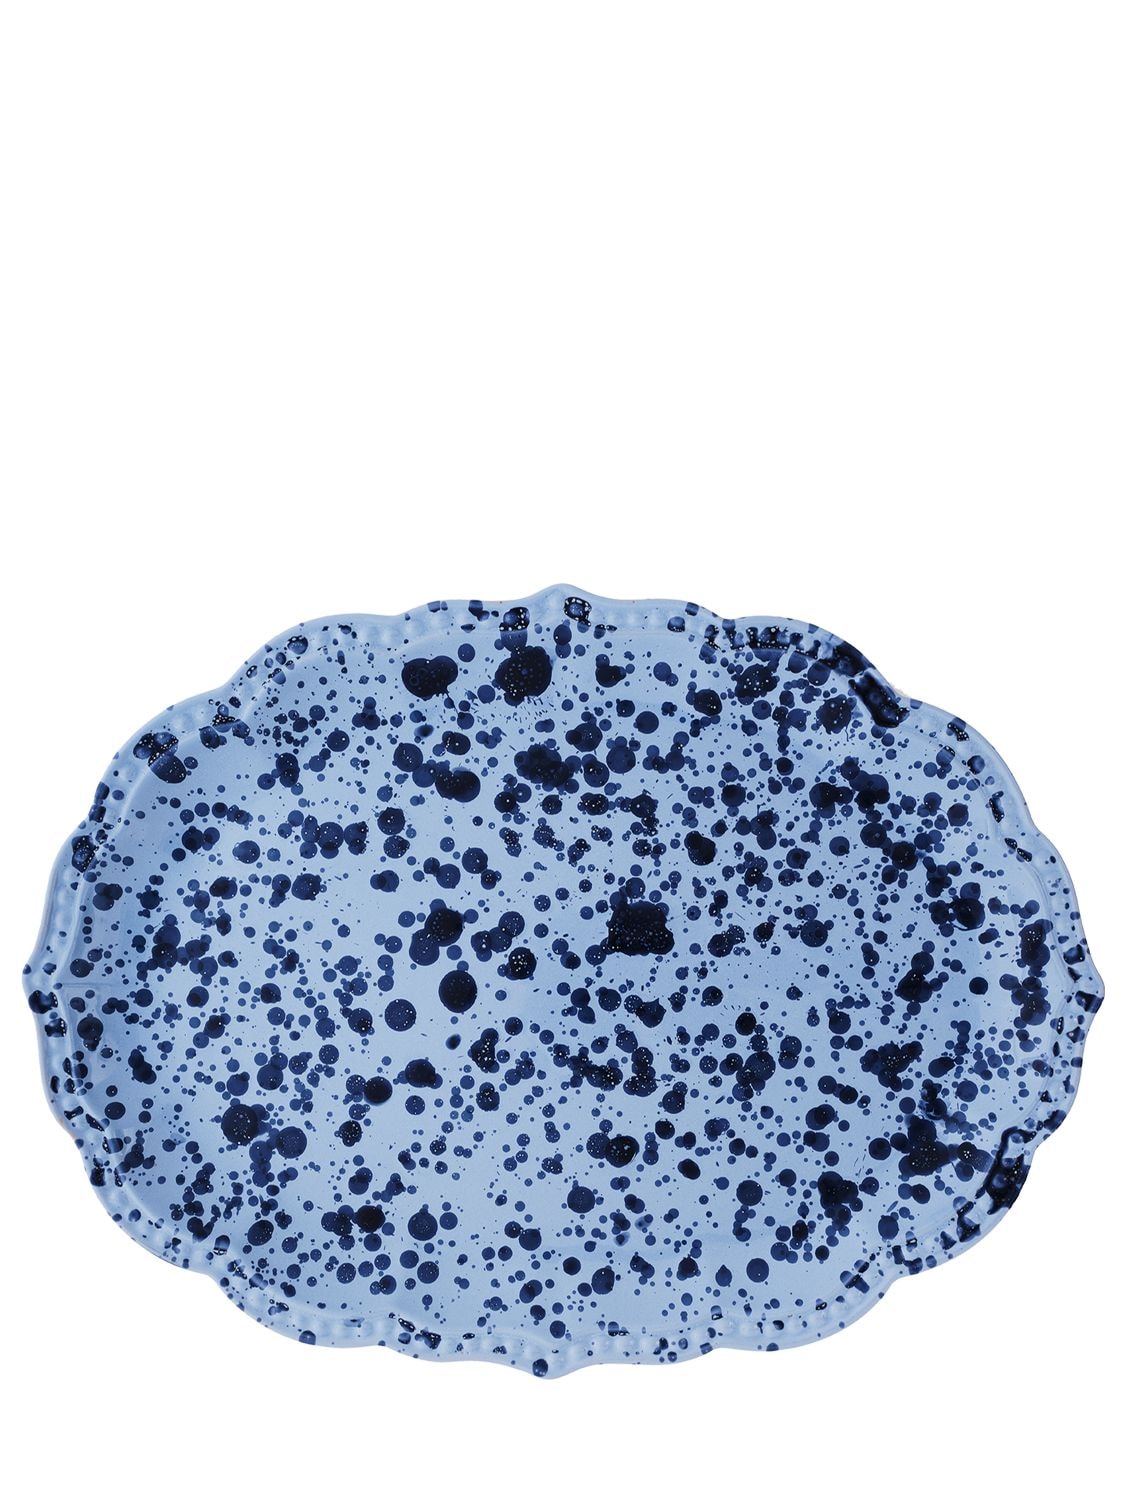 Cabana Speckled Serving Plate In Blue